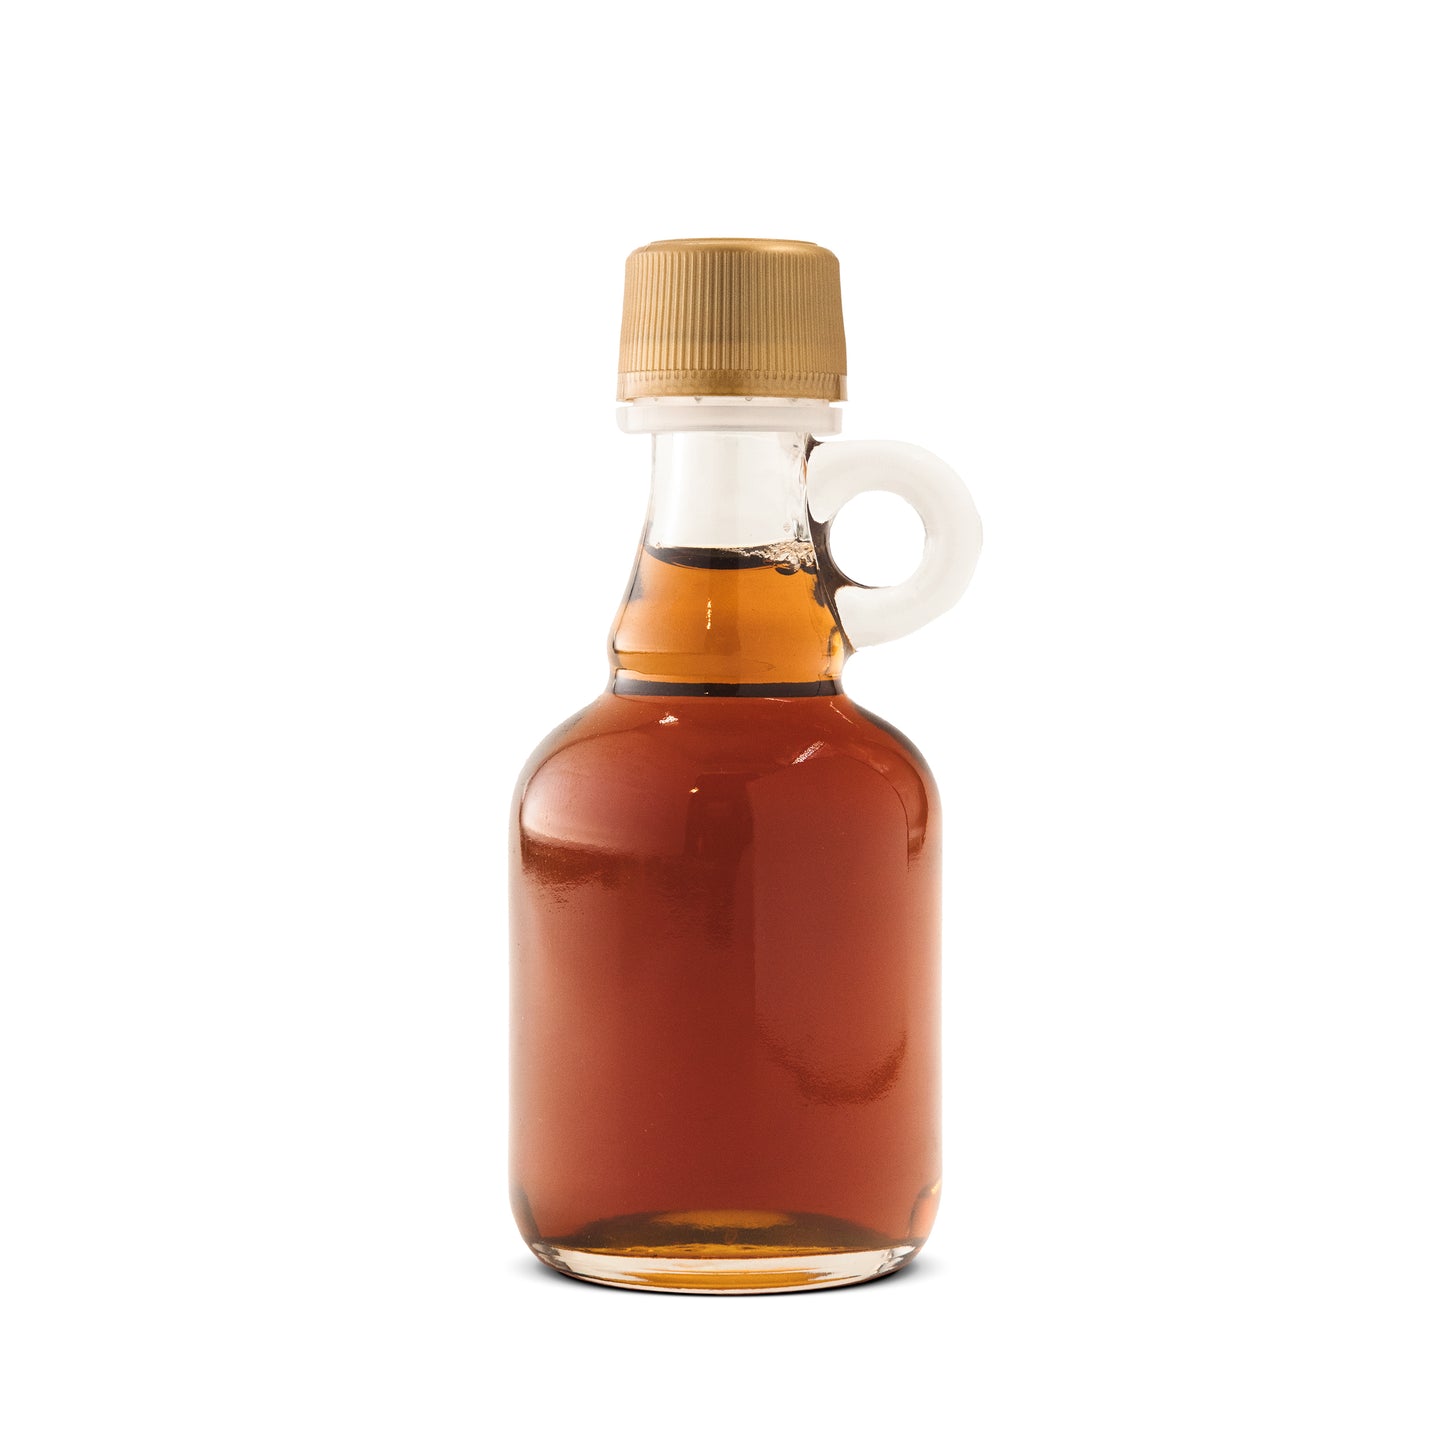 Ben's Pure Maple Syrup Favors - Glass Nip Bottle - 1.7 oz